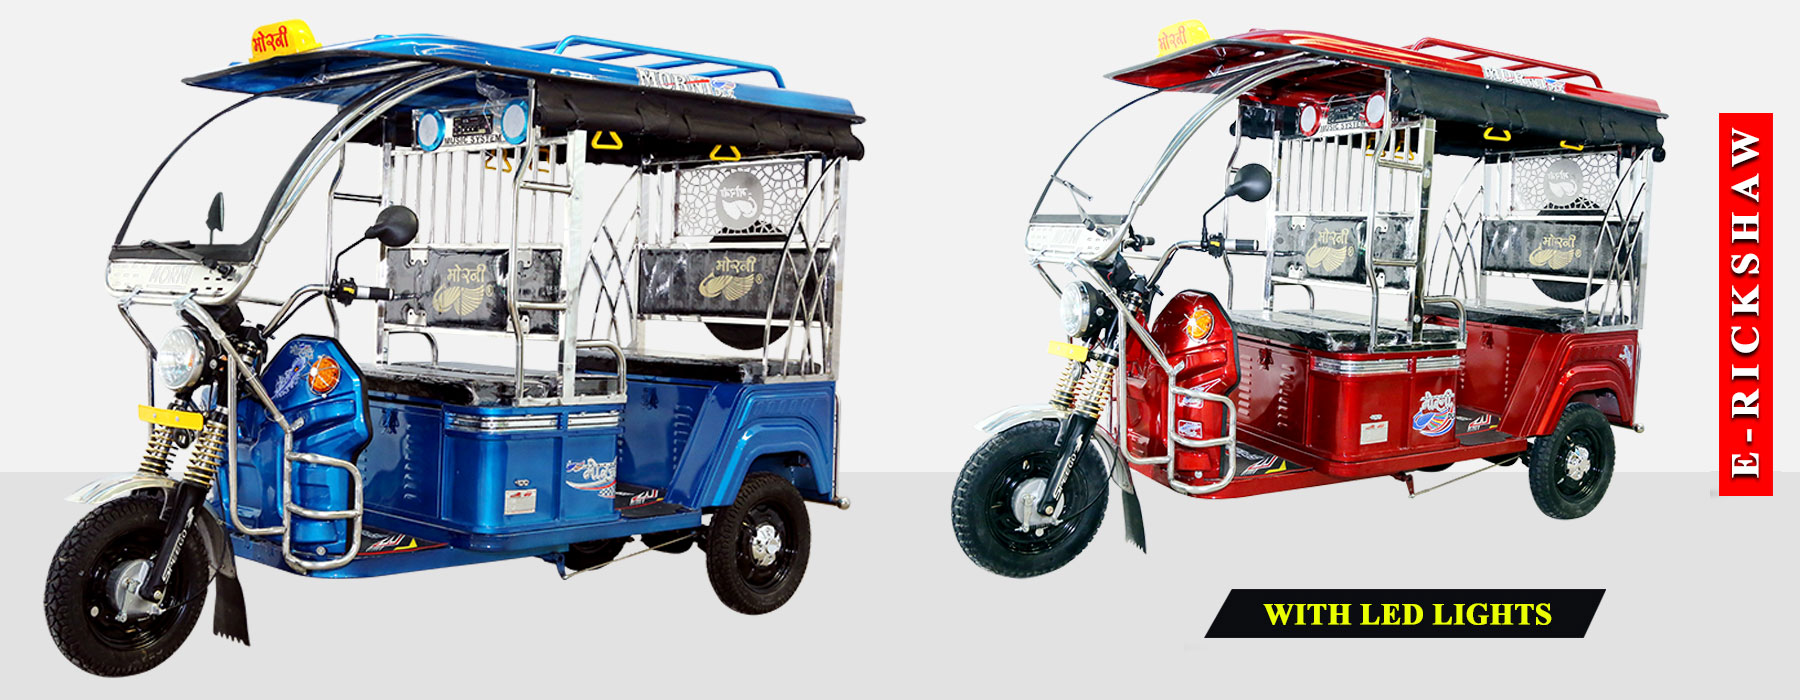 Top-Notch E-rickshaw Manufacturers In India - Speego